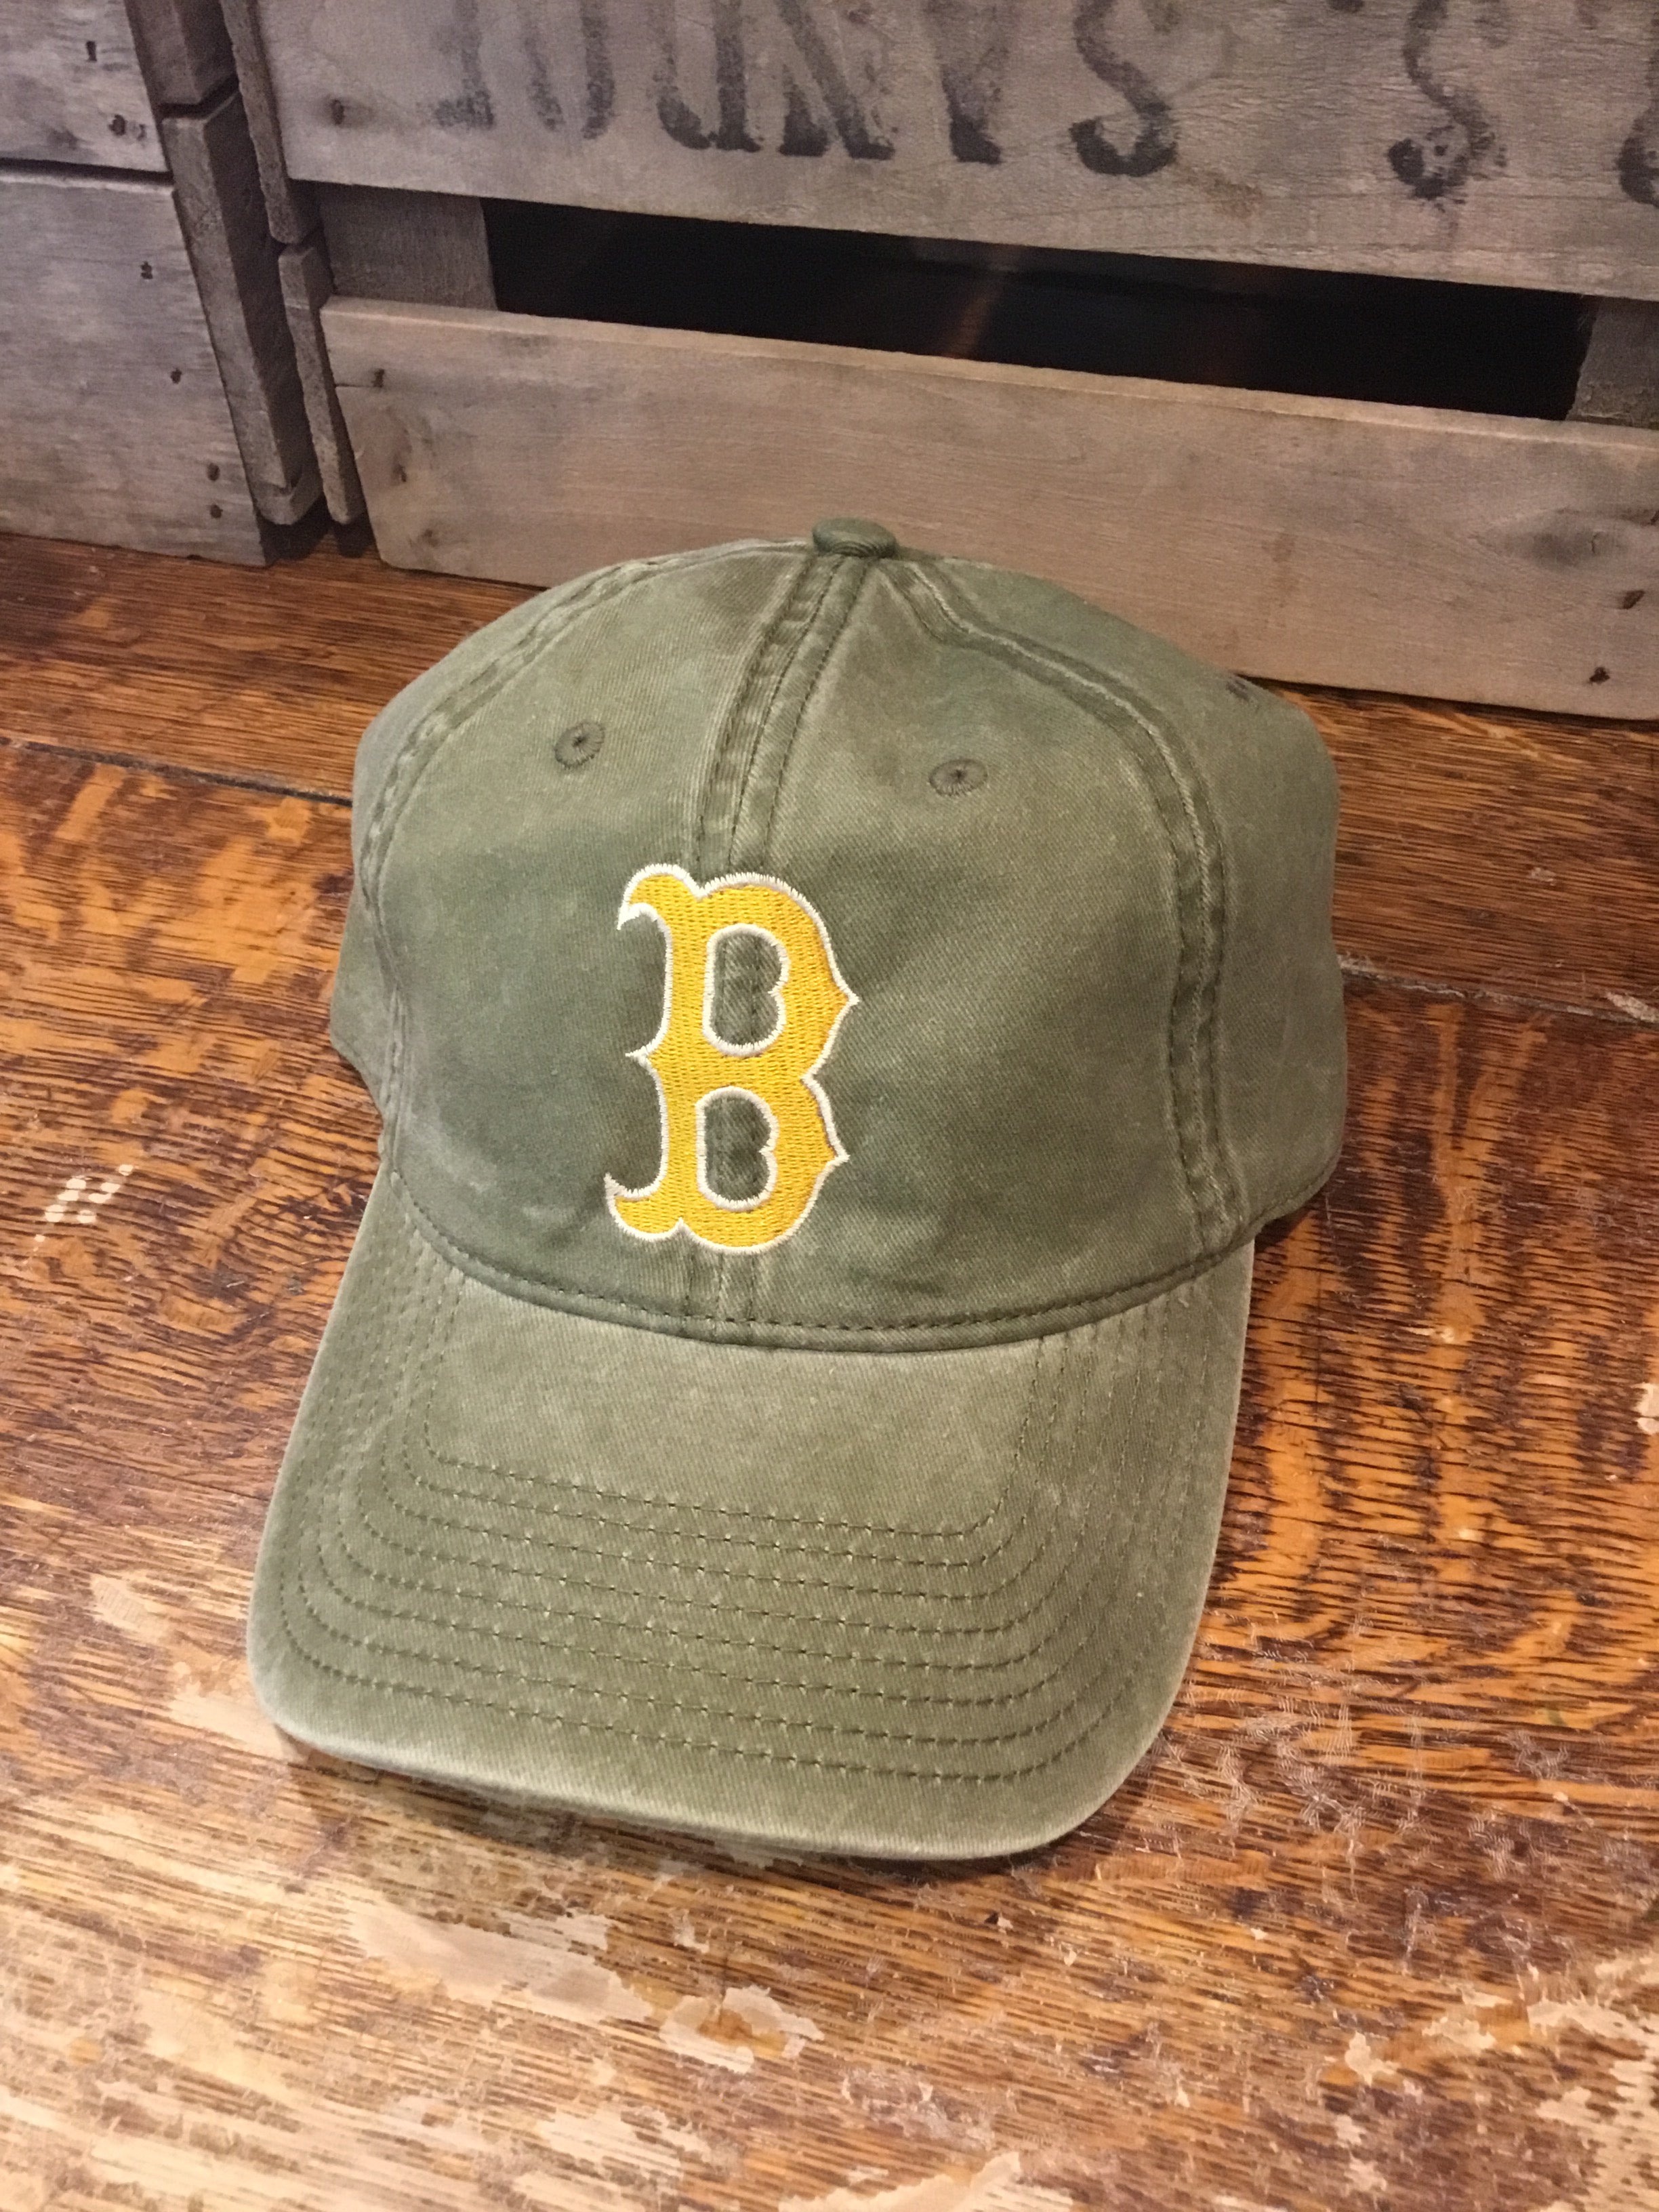 Embroidered B baseball hat